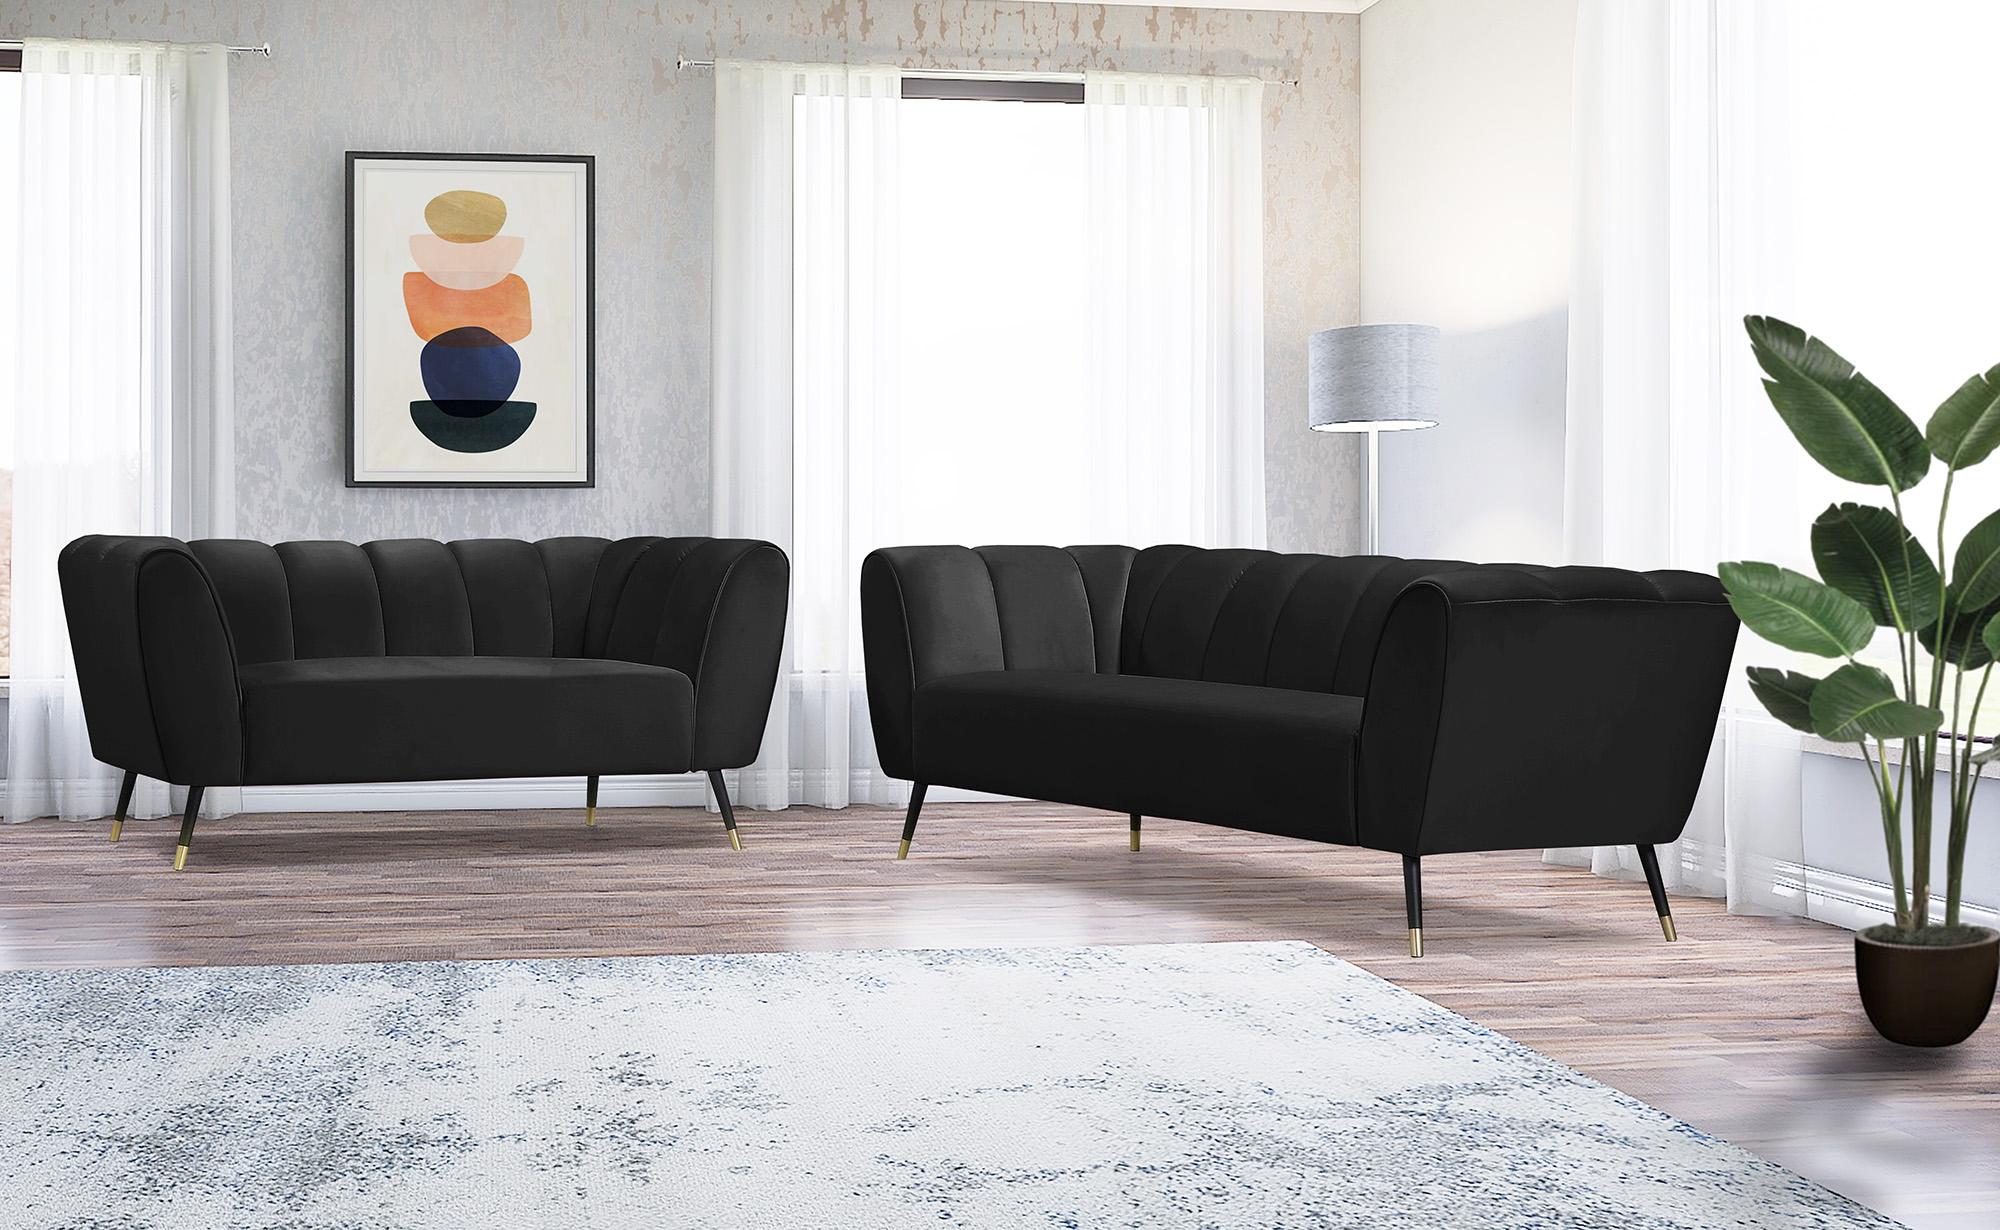 

    
626Black-S Black Velvet Channel Tufted Sofa BEAUMONT 626Black-S Meridian Contemporary
